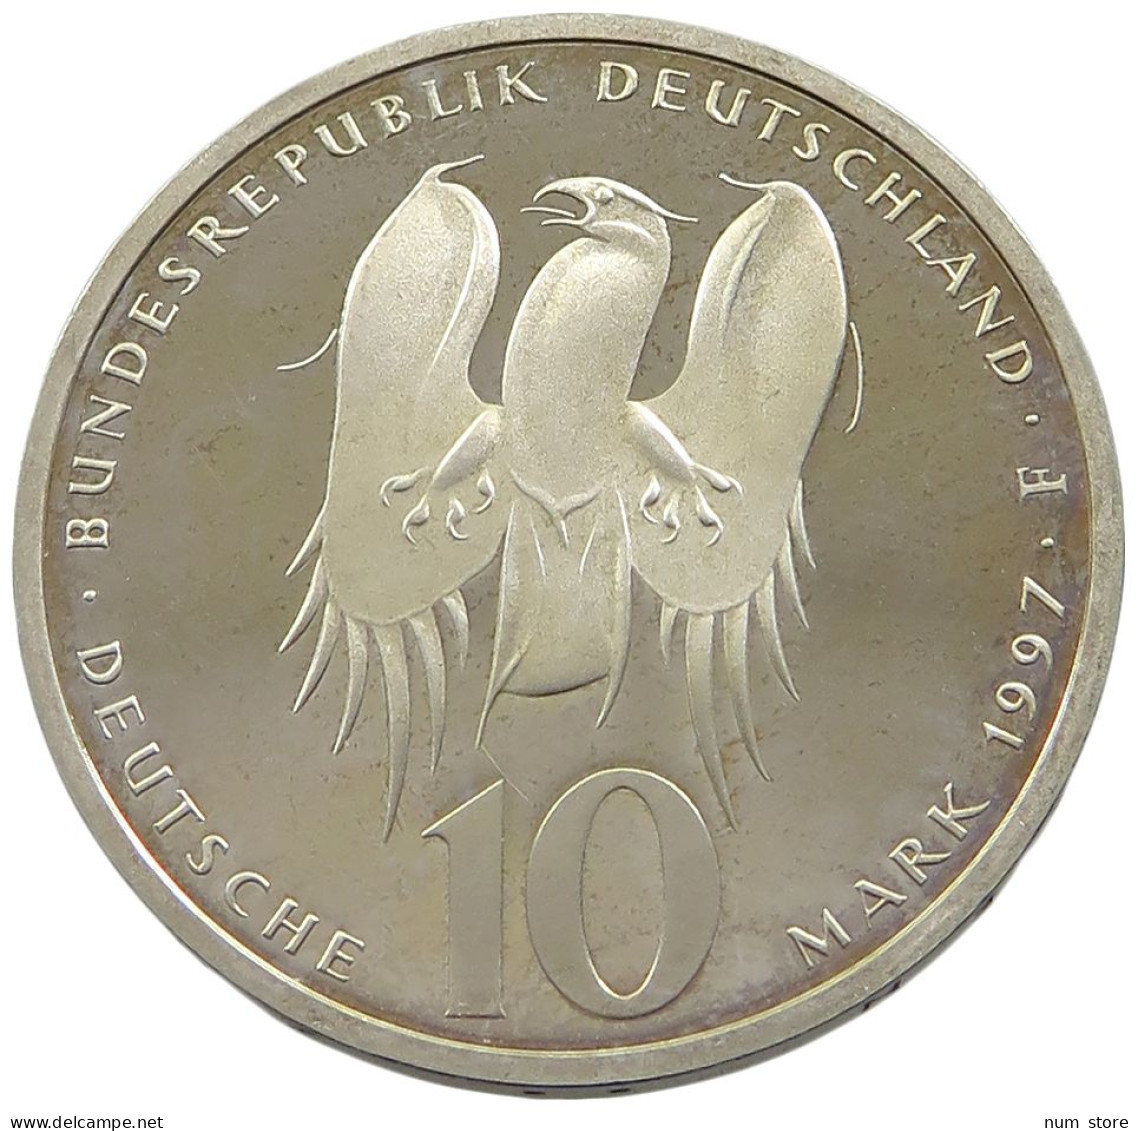 GERMANY BRD 10 MARK 1997 F PROOF #sm14 1009 - 10 Mark